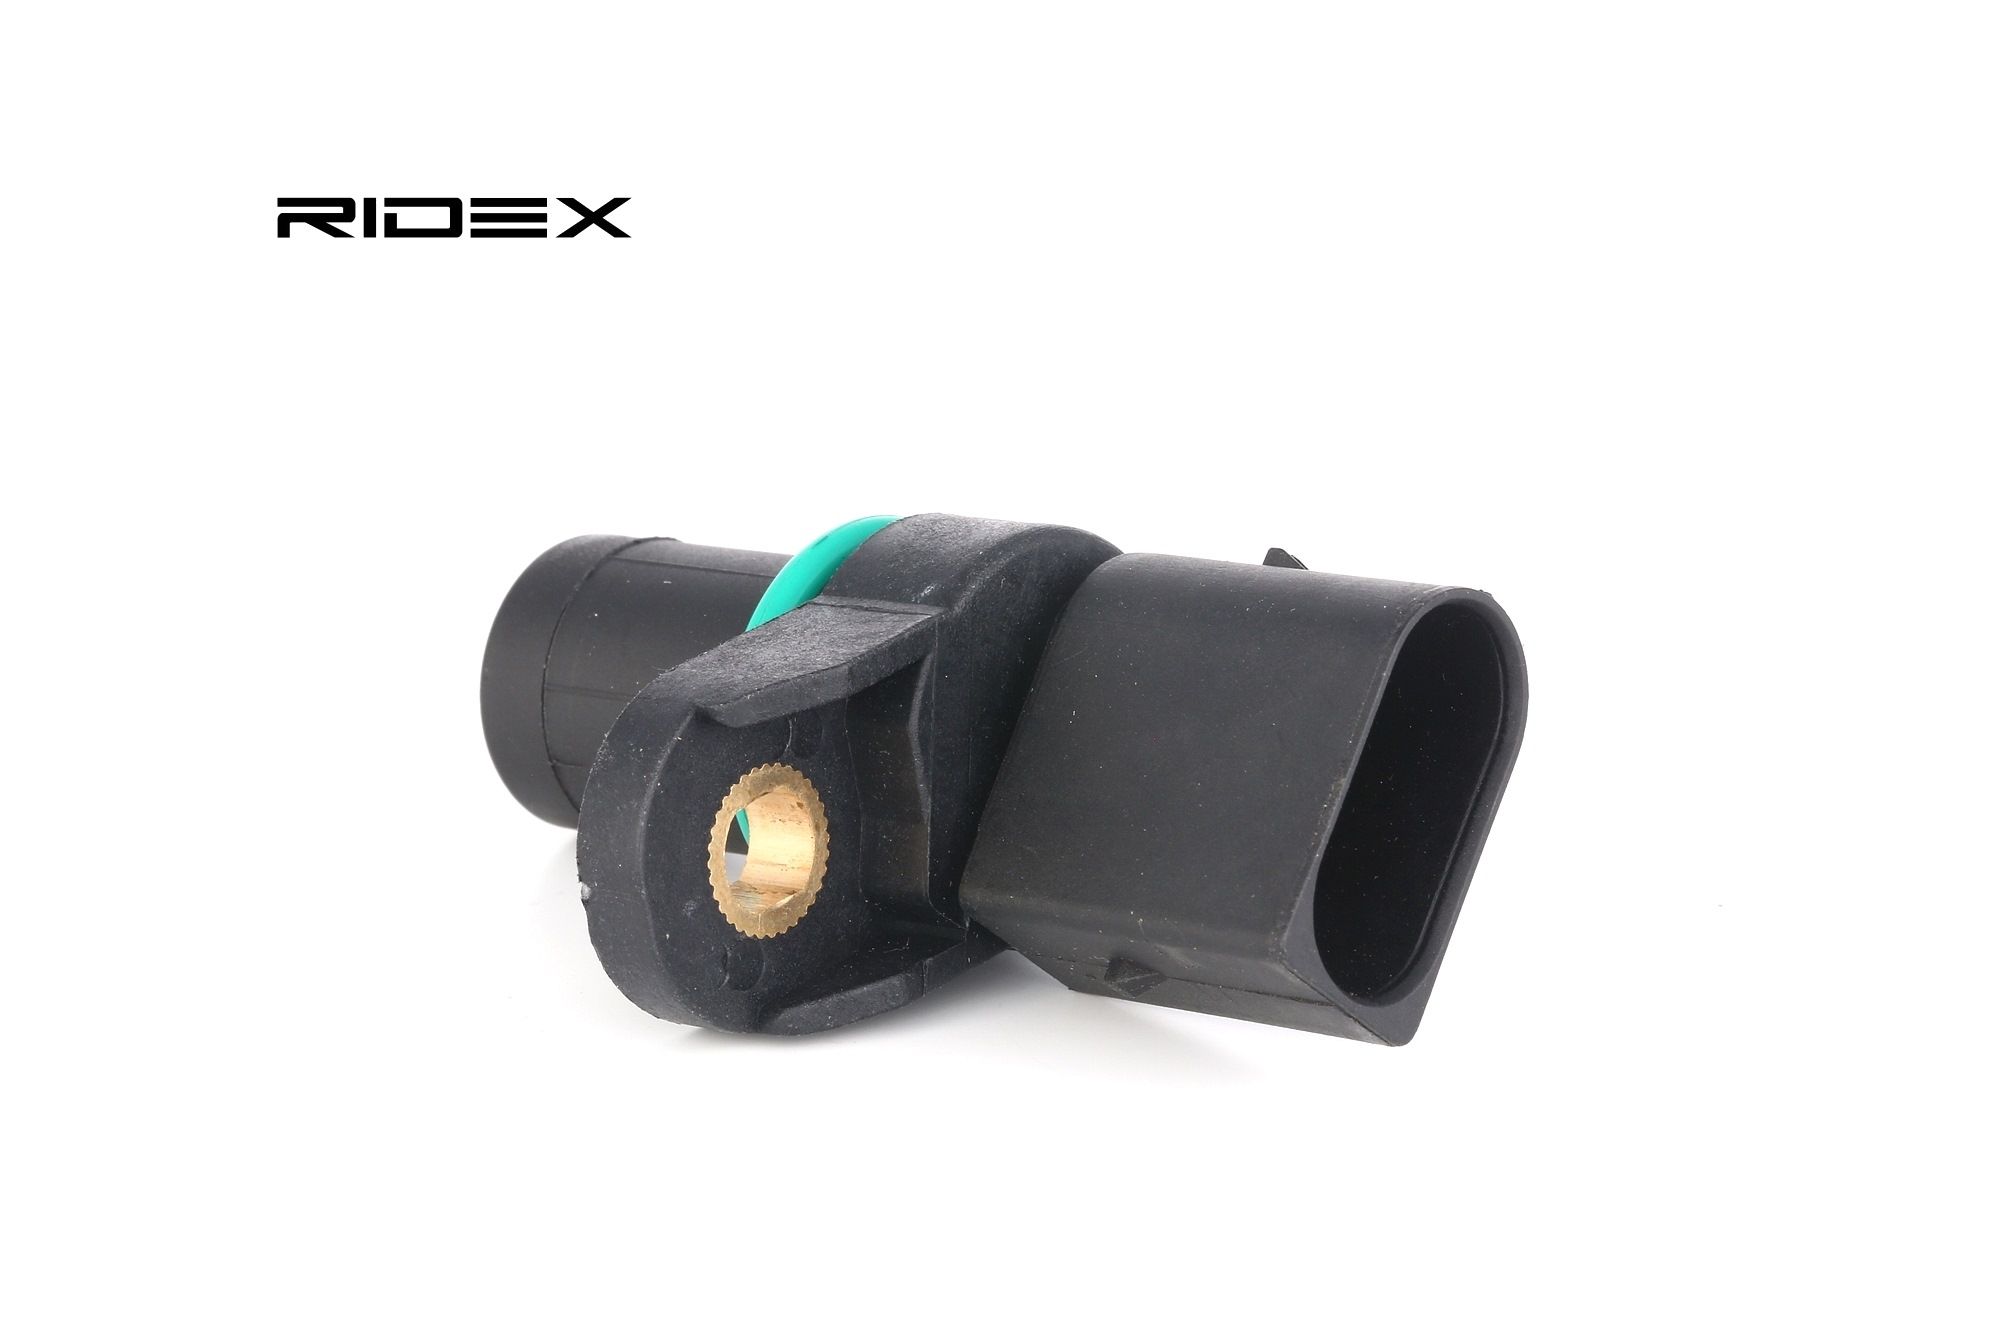 RIDEX 833C0039 Crankshaft sensor Hall Sensor, without cable, with seal ring